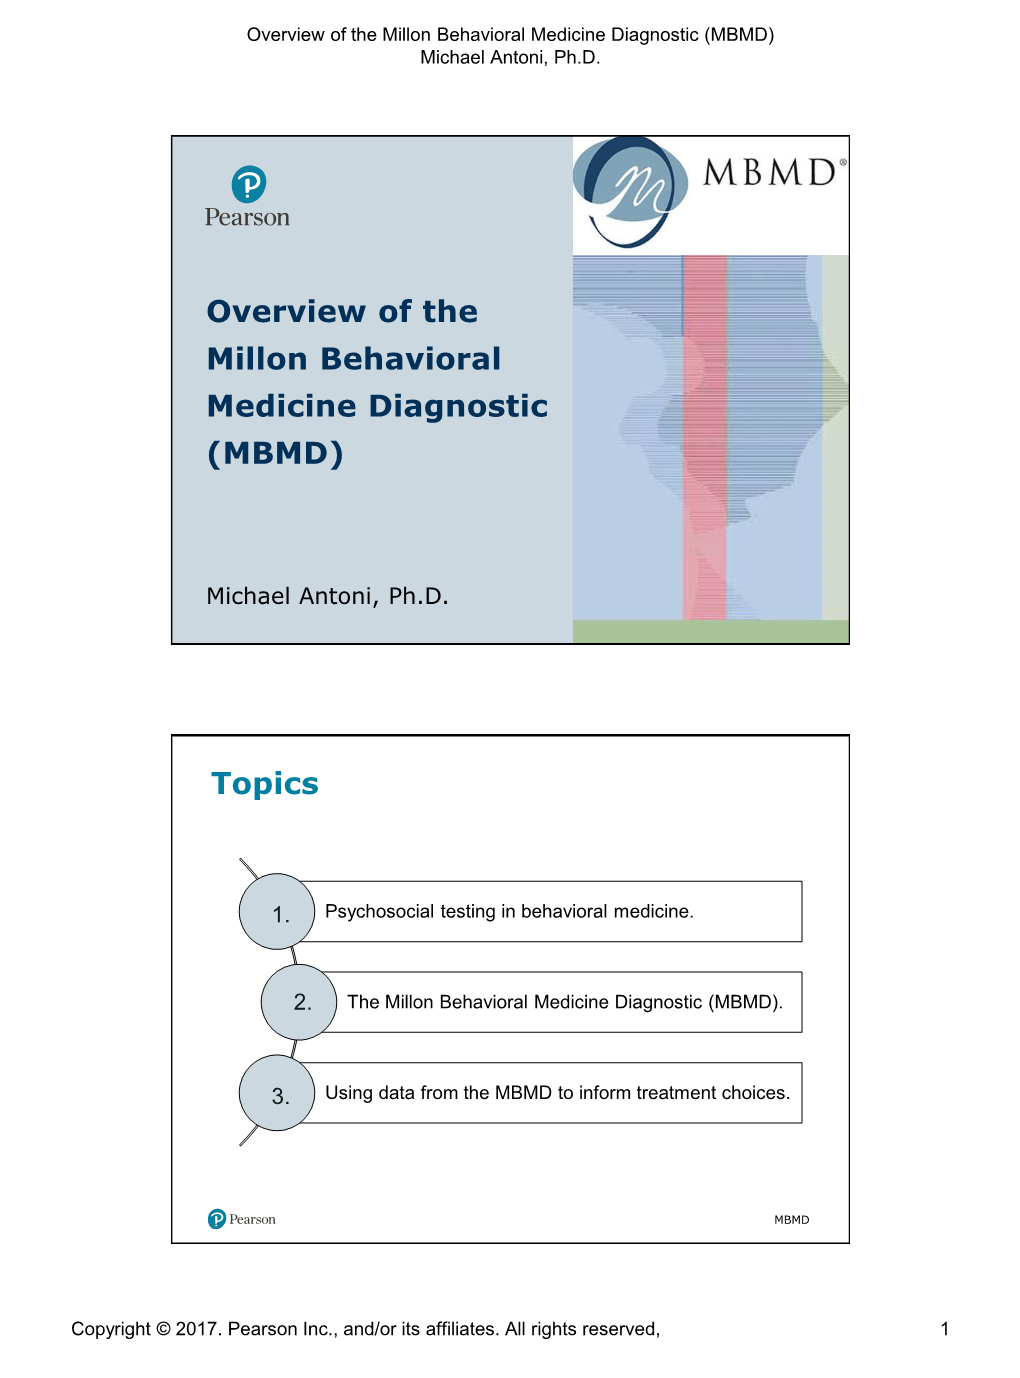 Overview of the Millon Behavioral Medicine Diagnostic (MBMD) Topics